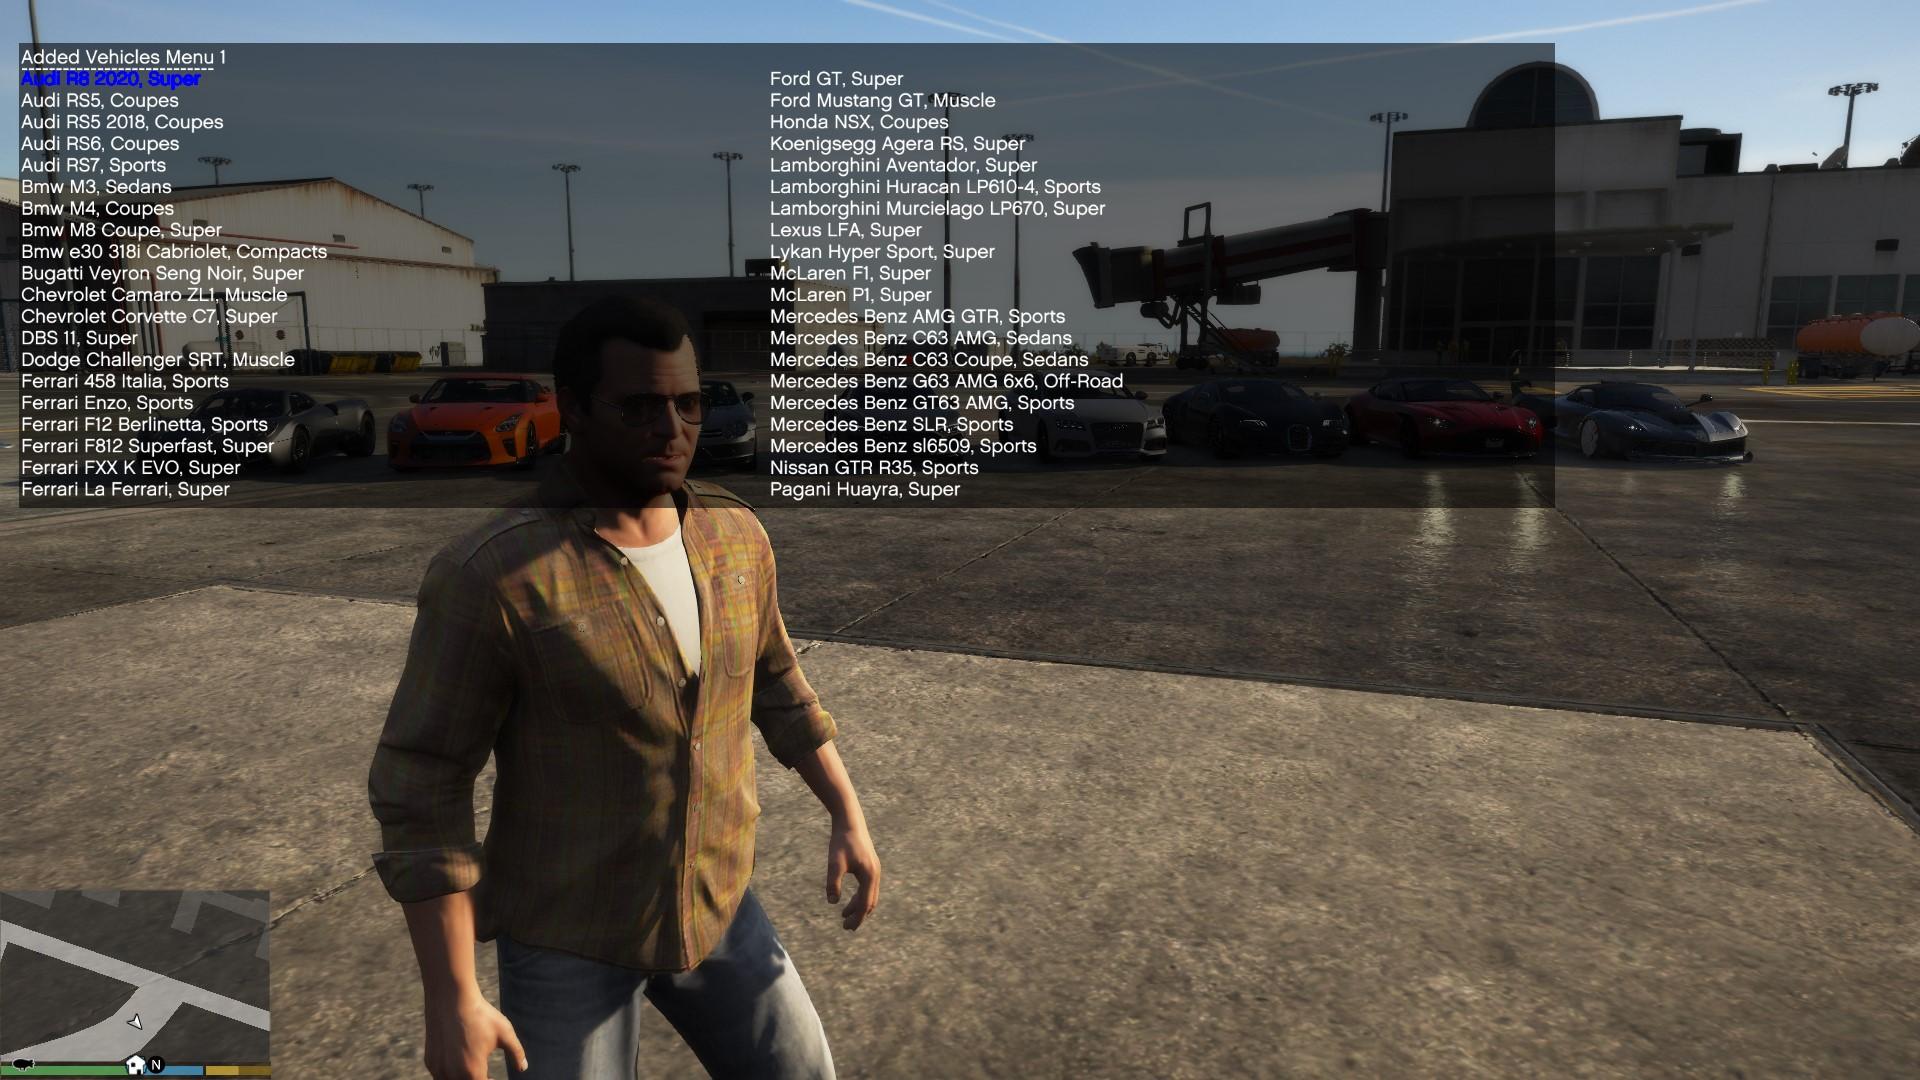 Grand Theft Auto V Launcher by lordikman file - ModDB